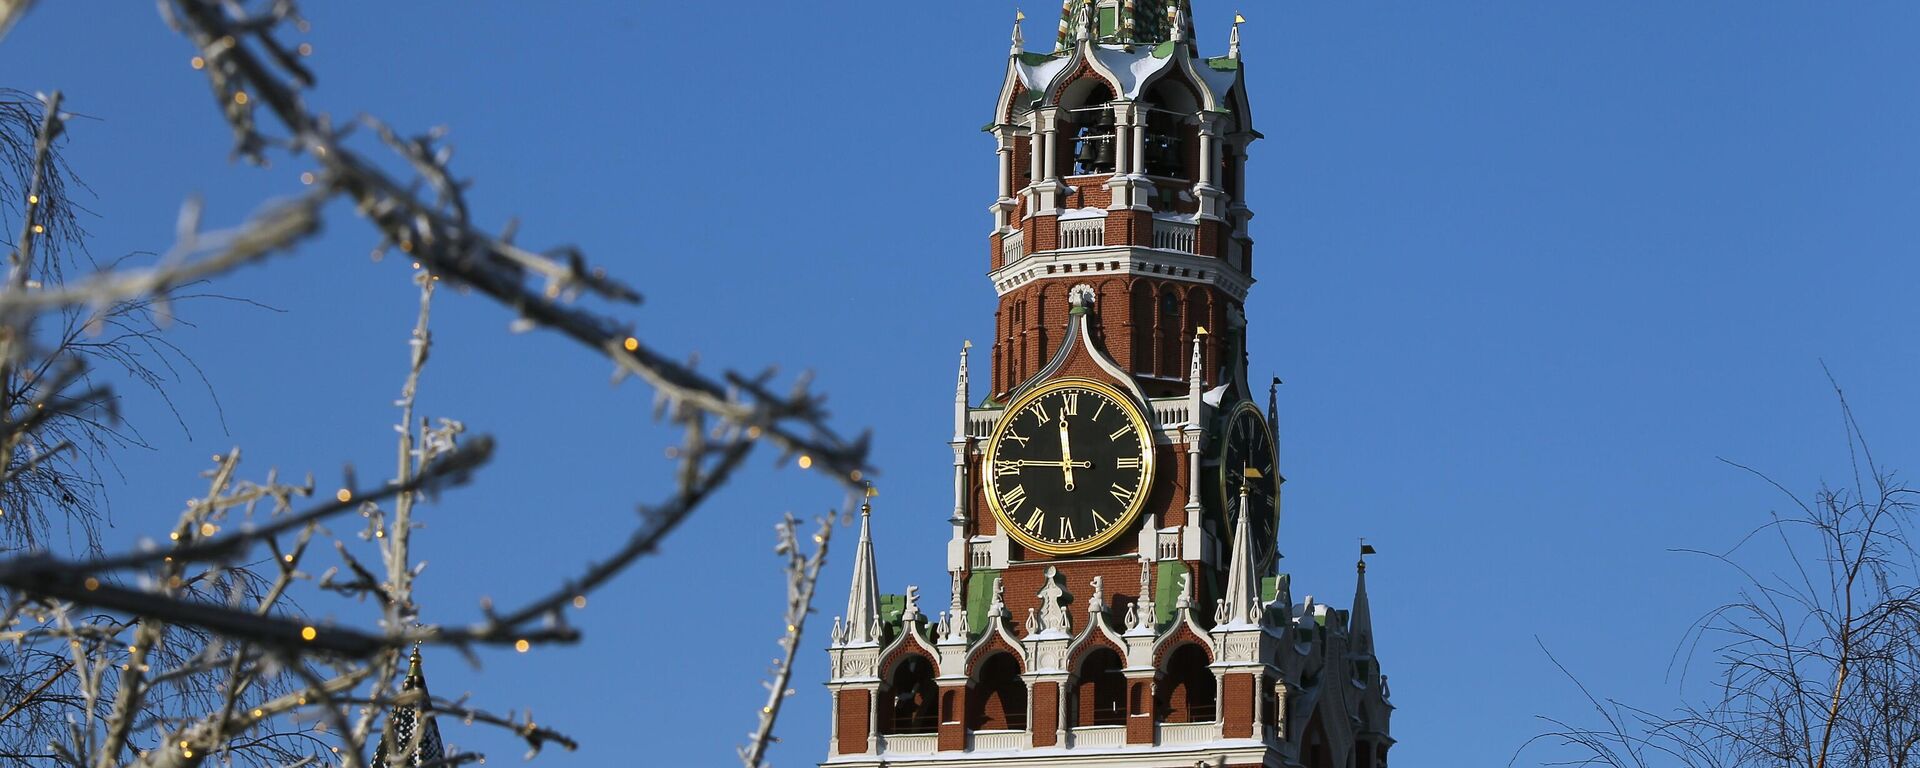 Tháp Spasskaya của Điện Kremlin Moscow. - Sputnik Việt Nam, 1920, 17.03.2022